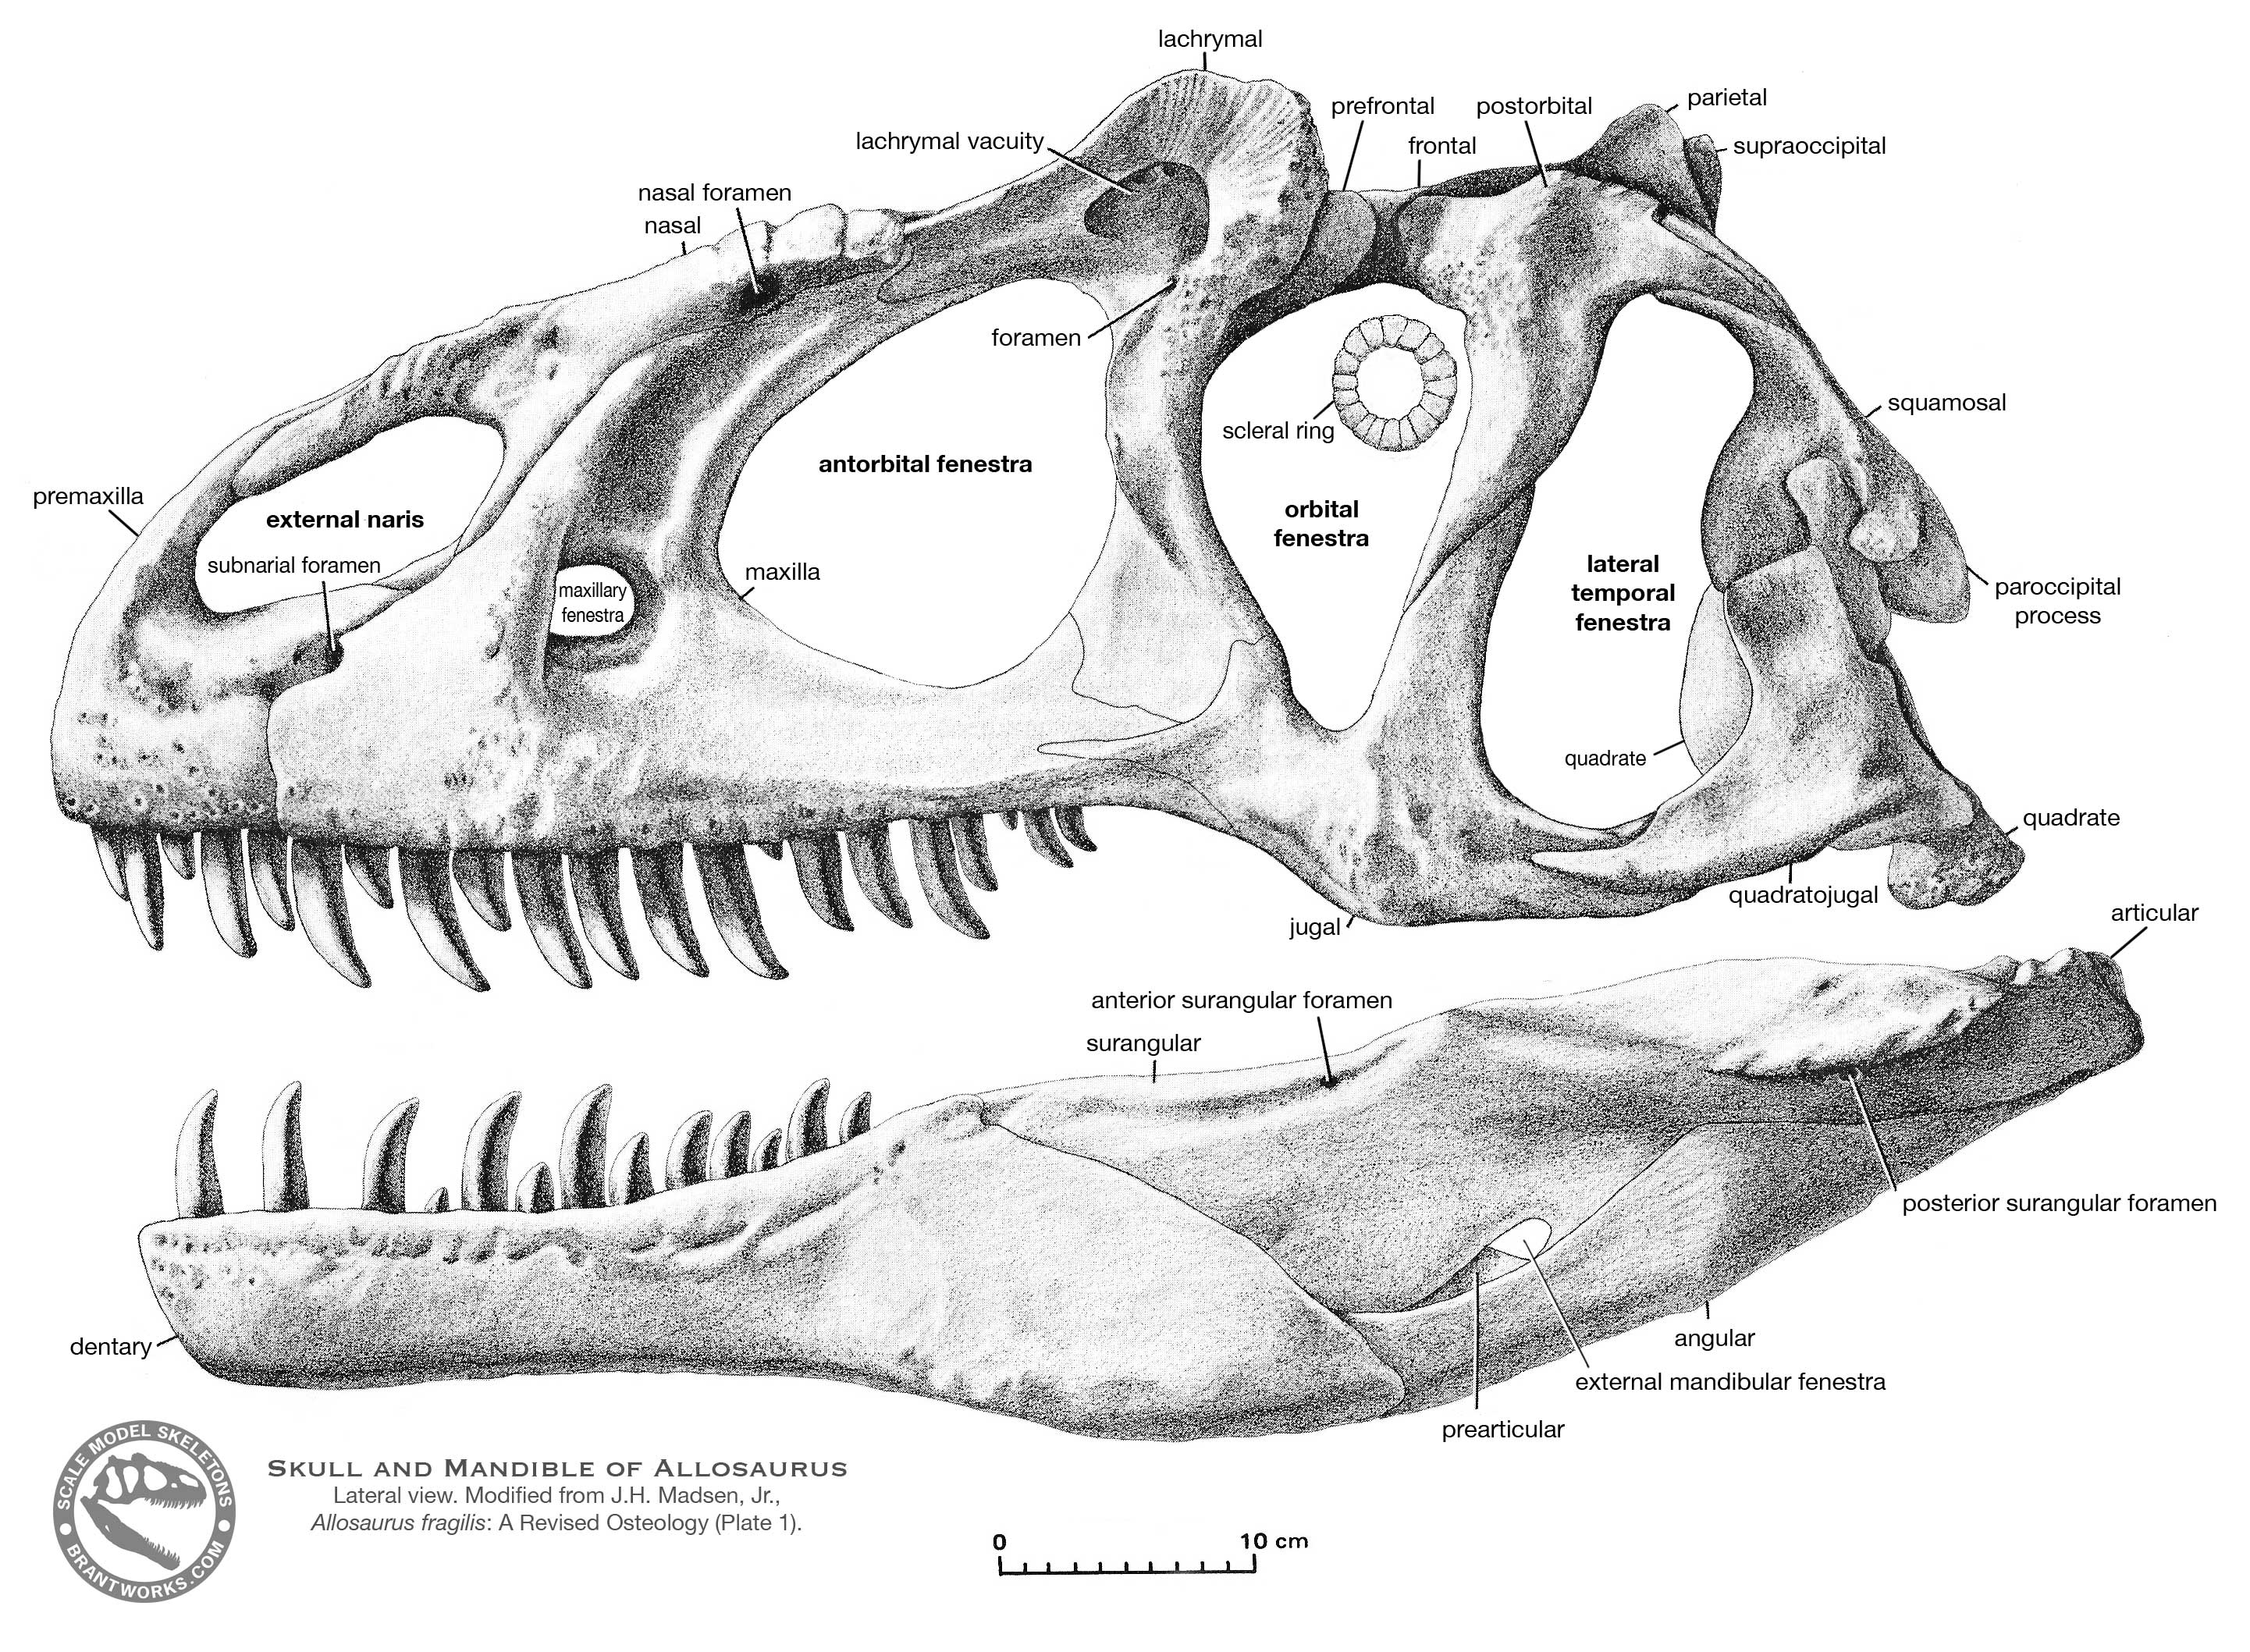 BrantWorks: Allosaurus skull